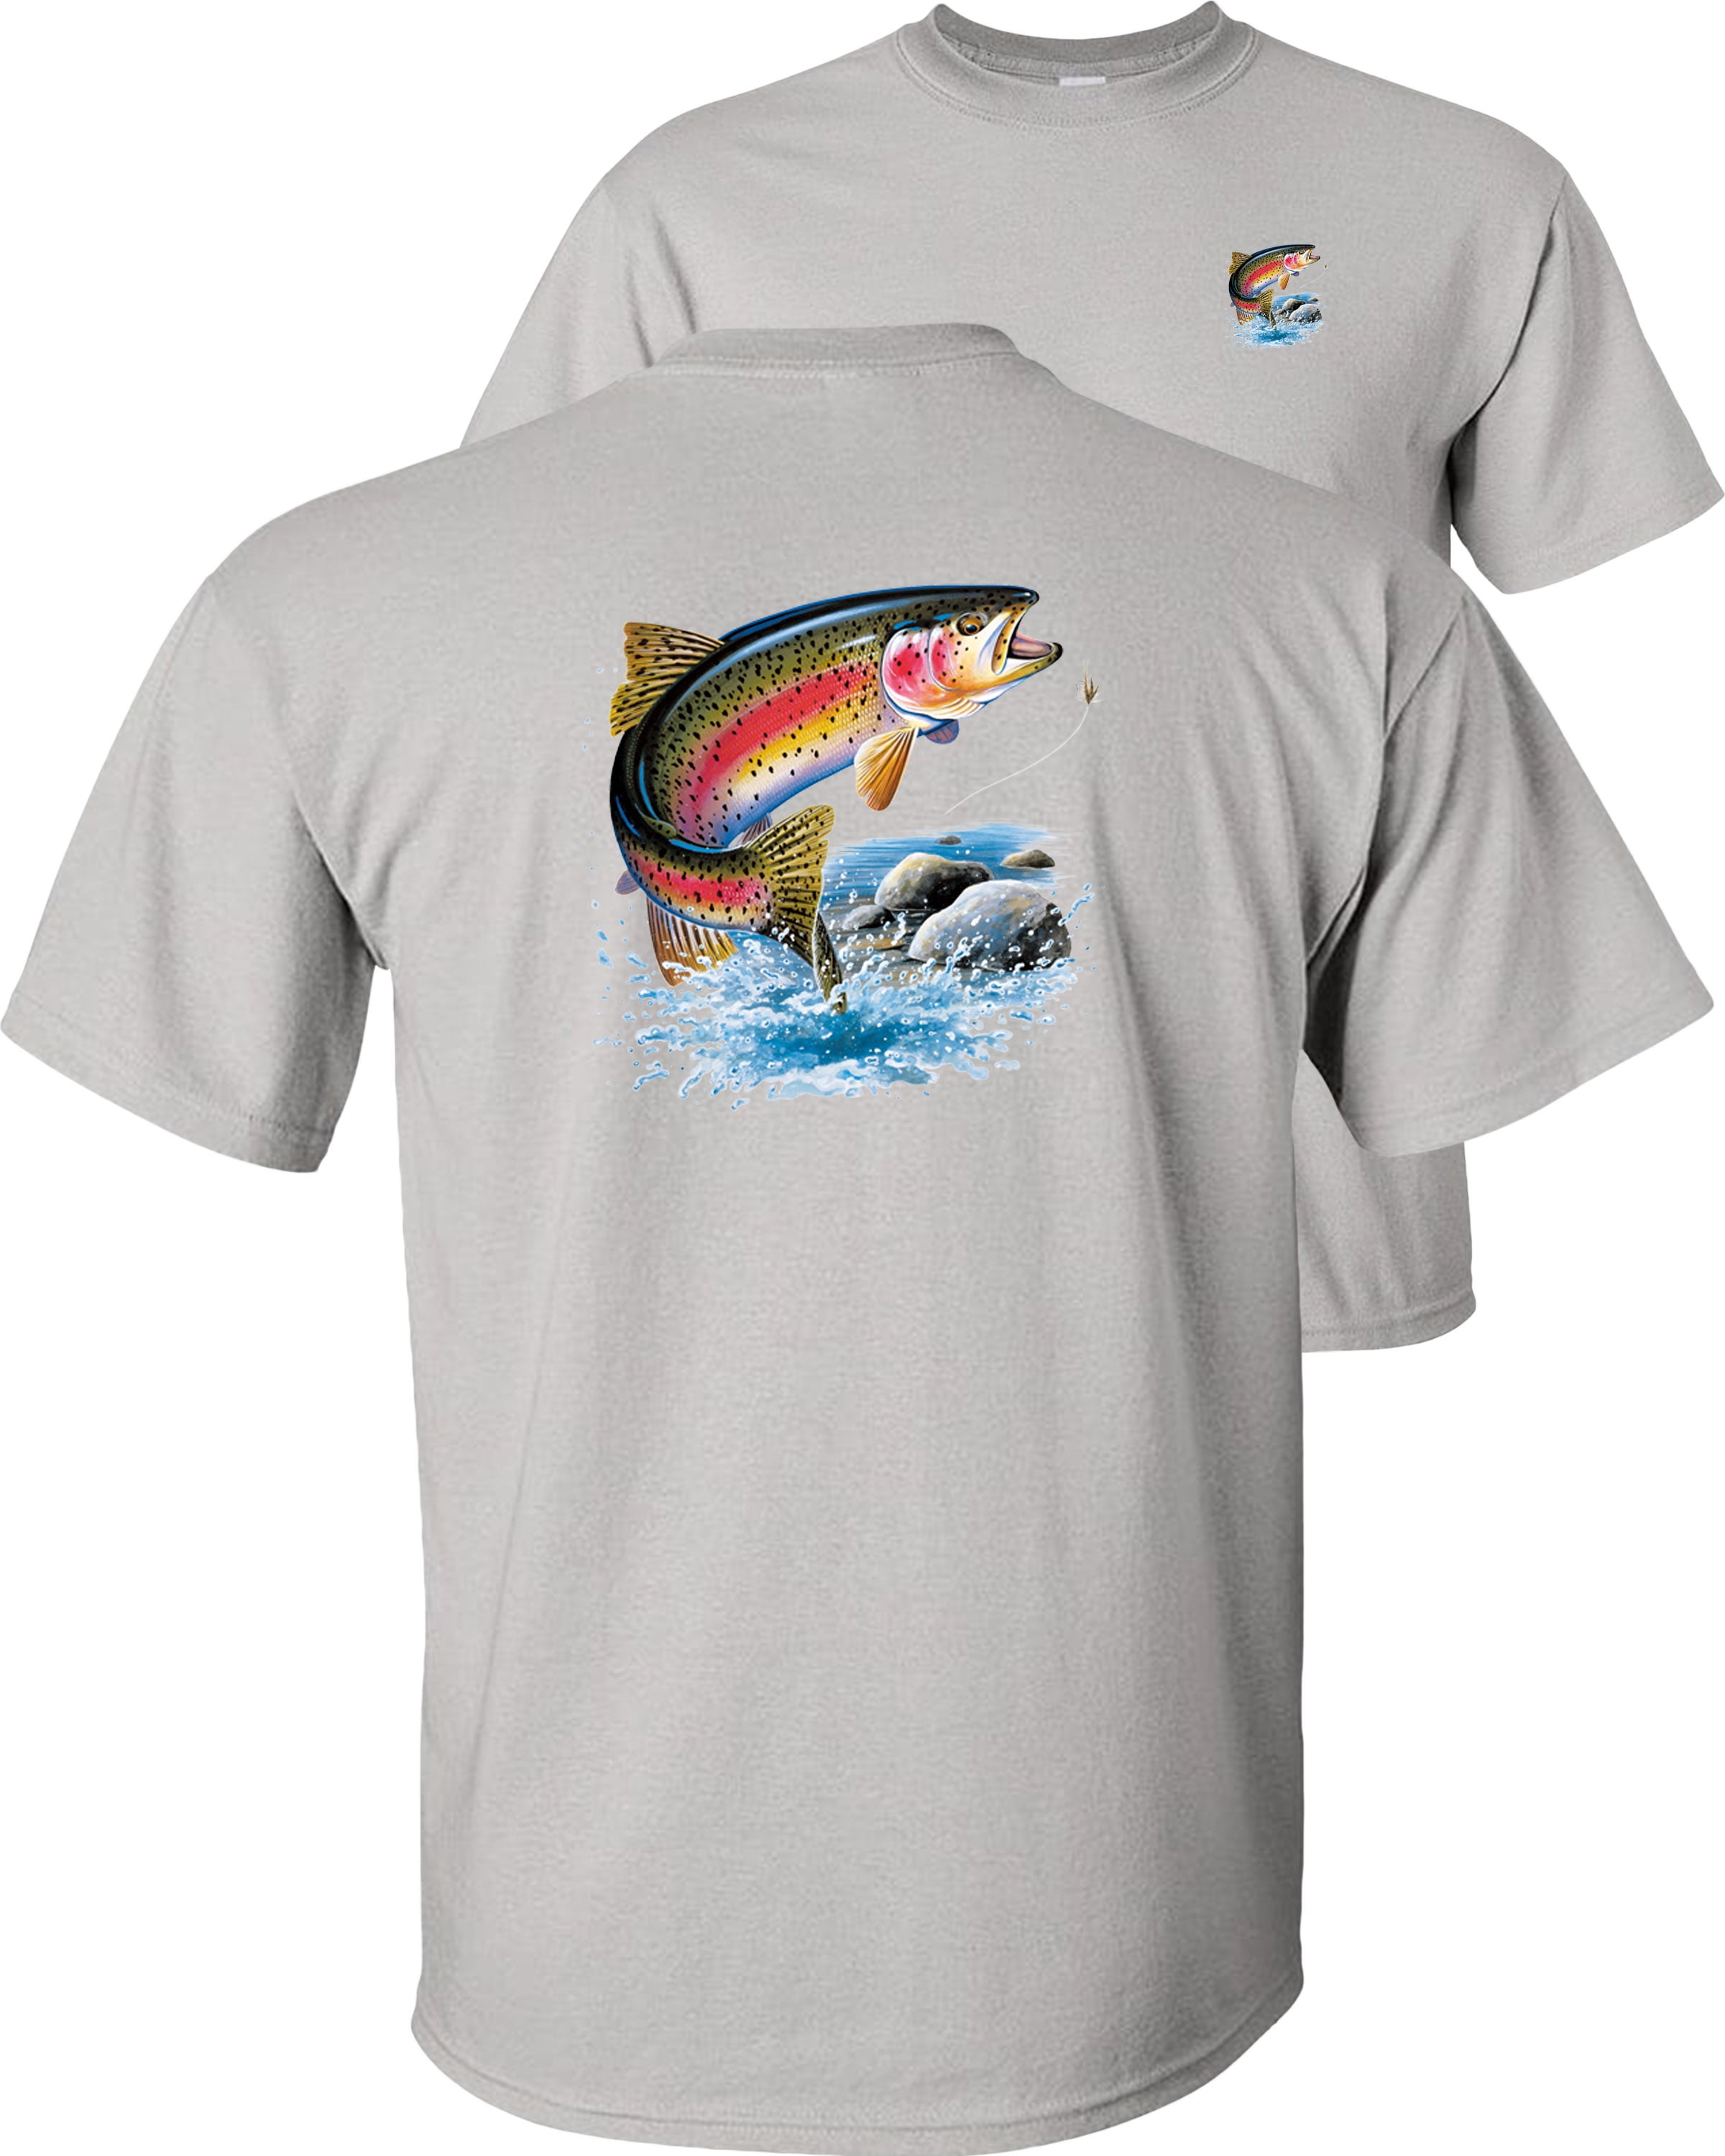 Fair Game - Rainbow Trout T-Shirt Going for Lure Fishing - Walmart.com